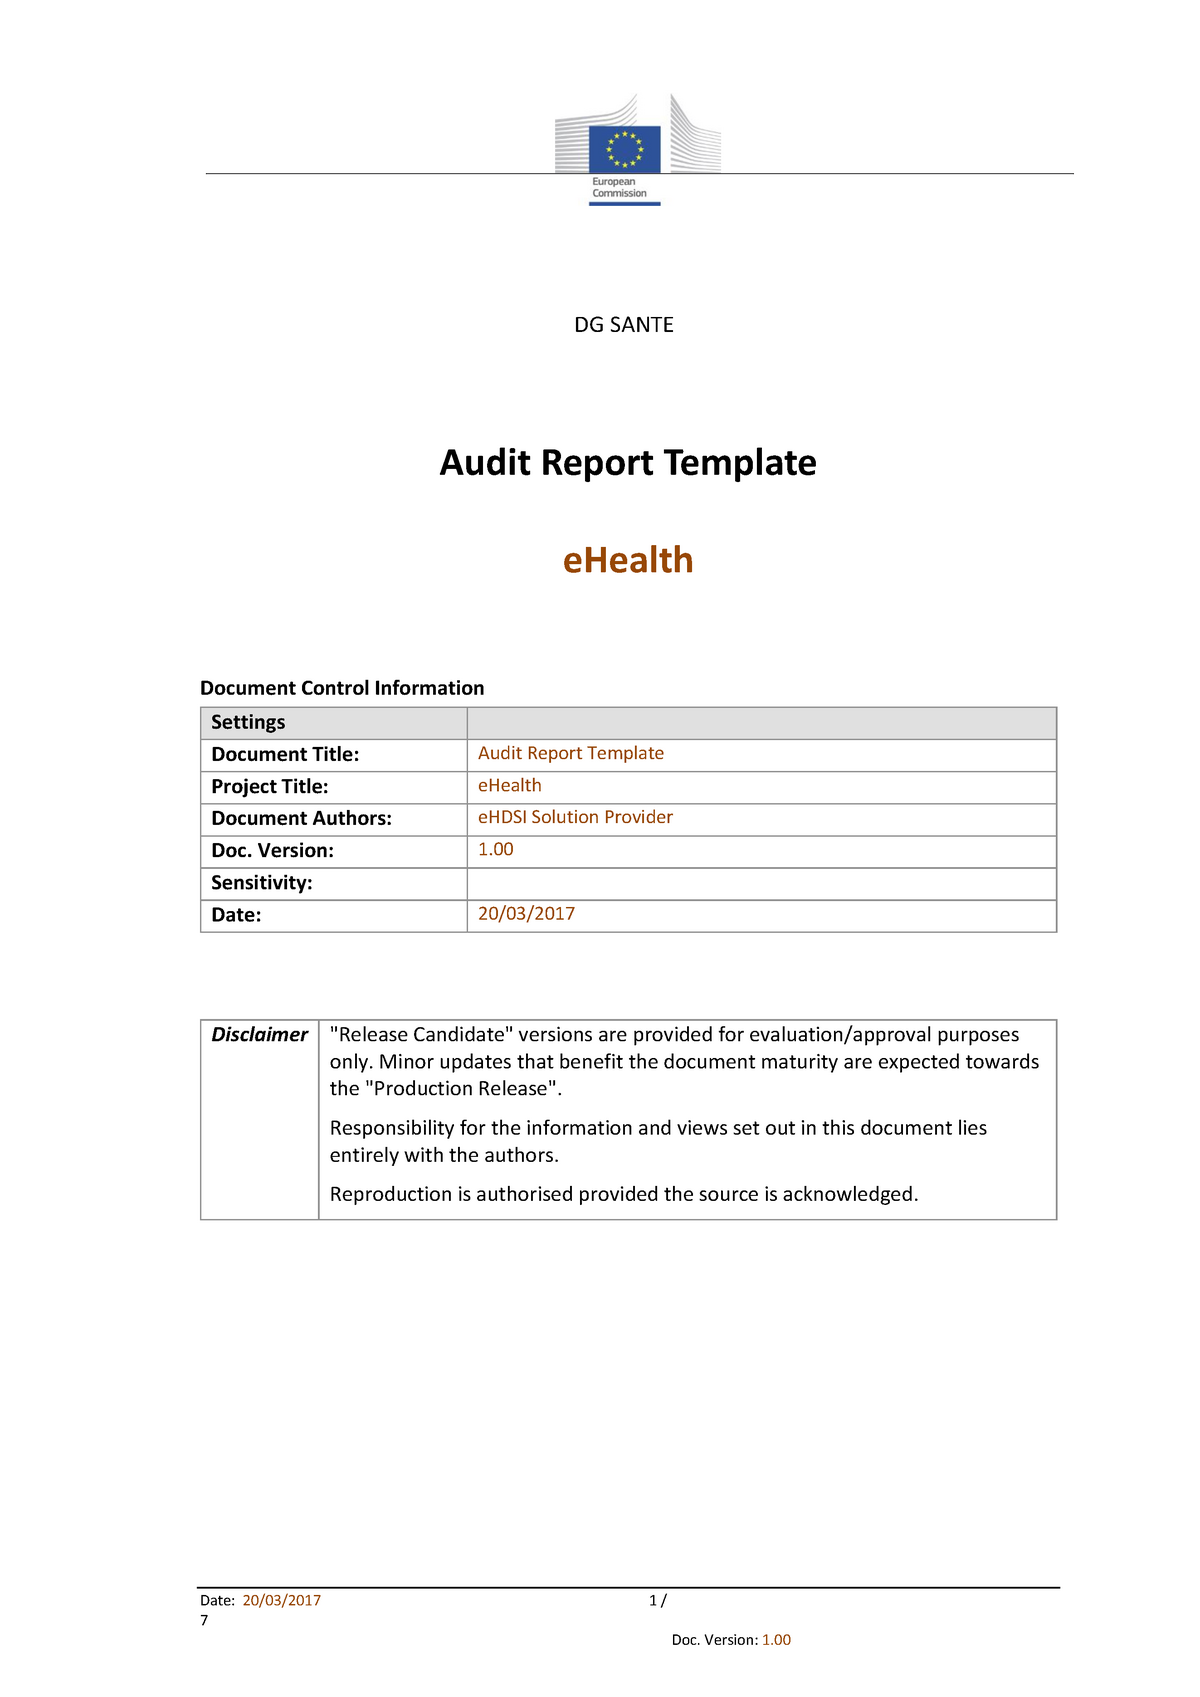 e health audit report template v1 date 20 03 2017 1 7 dg sante ehealth studocu cash flow from operating activities balance sheet